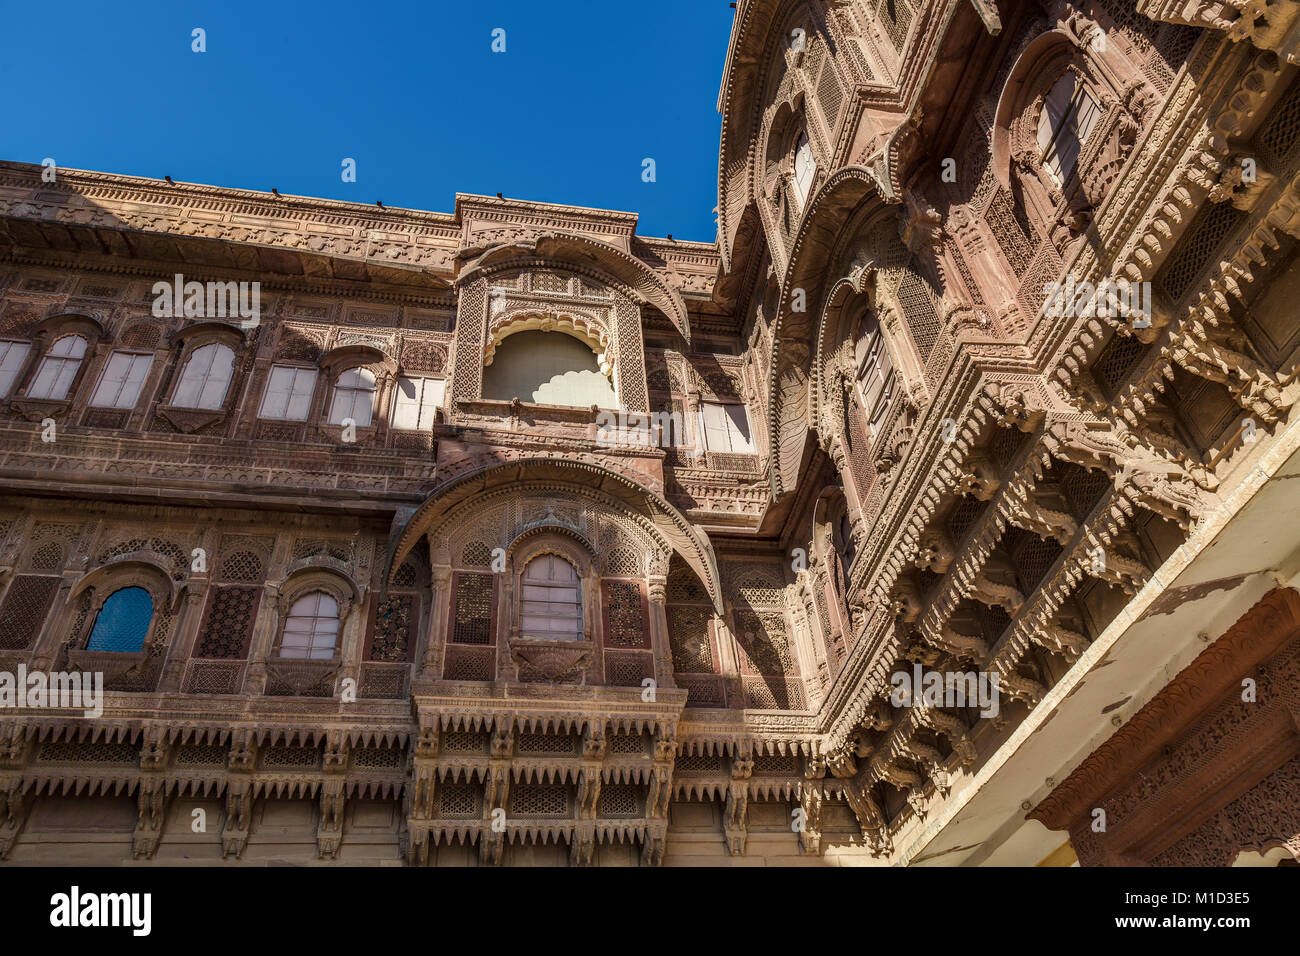 Mehrangarh Fort Jodhpur Rajasthan Royal Palace architektur kunst Details. Ein UNESCO Weltkulturerbe. Stockfoto